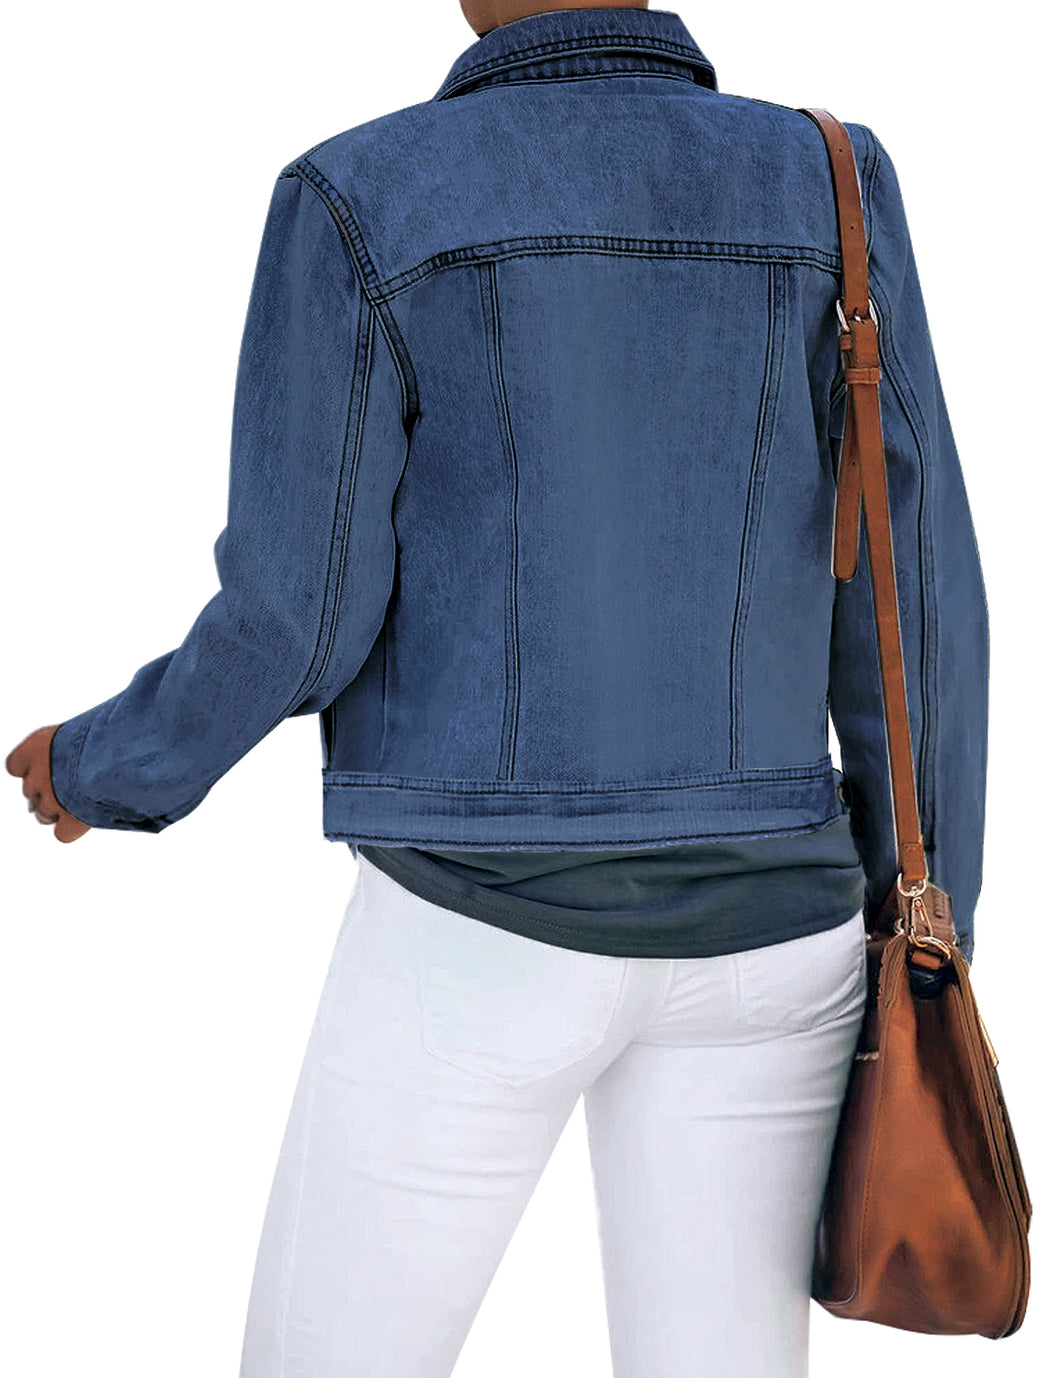 Nala Women's African Print Long Sleeve Denim Jacket  Denim jacket women,  Long sleeve denim jacket, Printed denim jeans